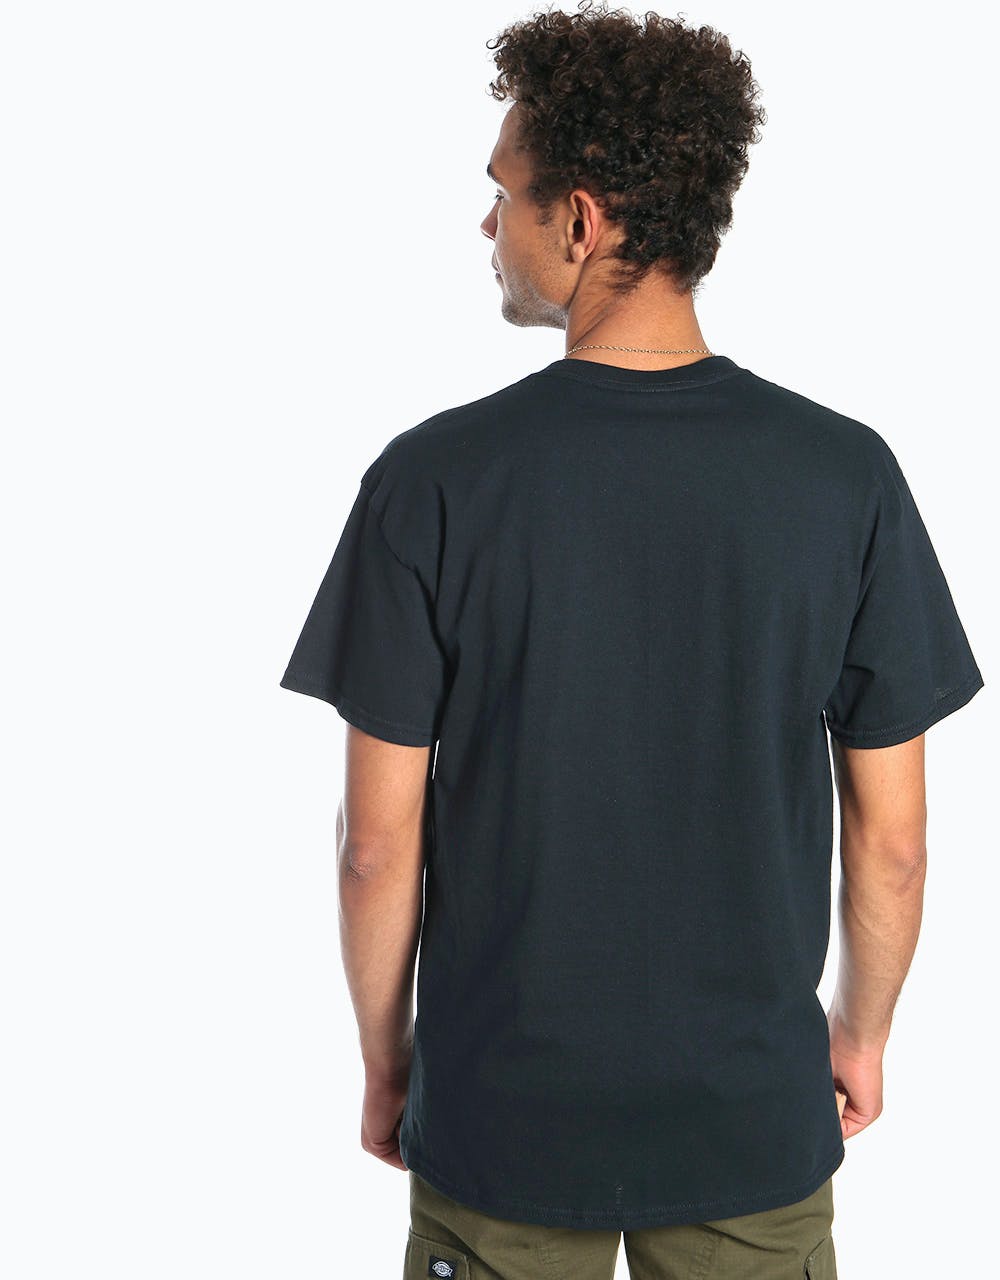 Manor Hepburn T-Shirt - Black